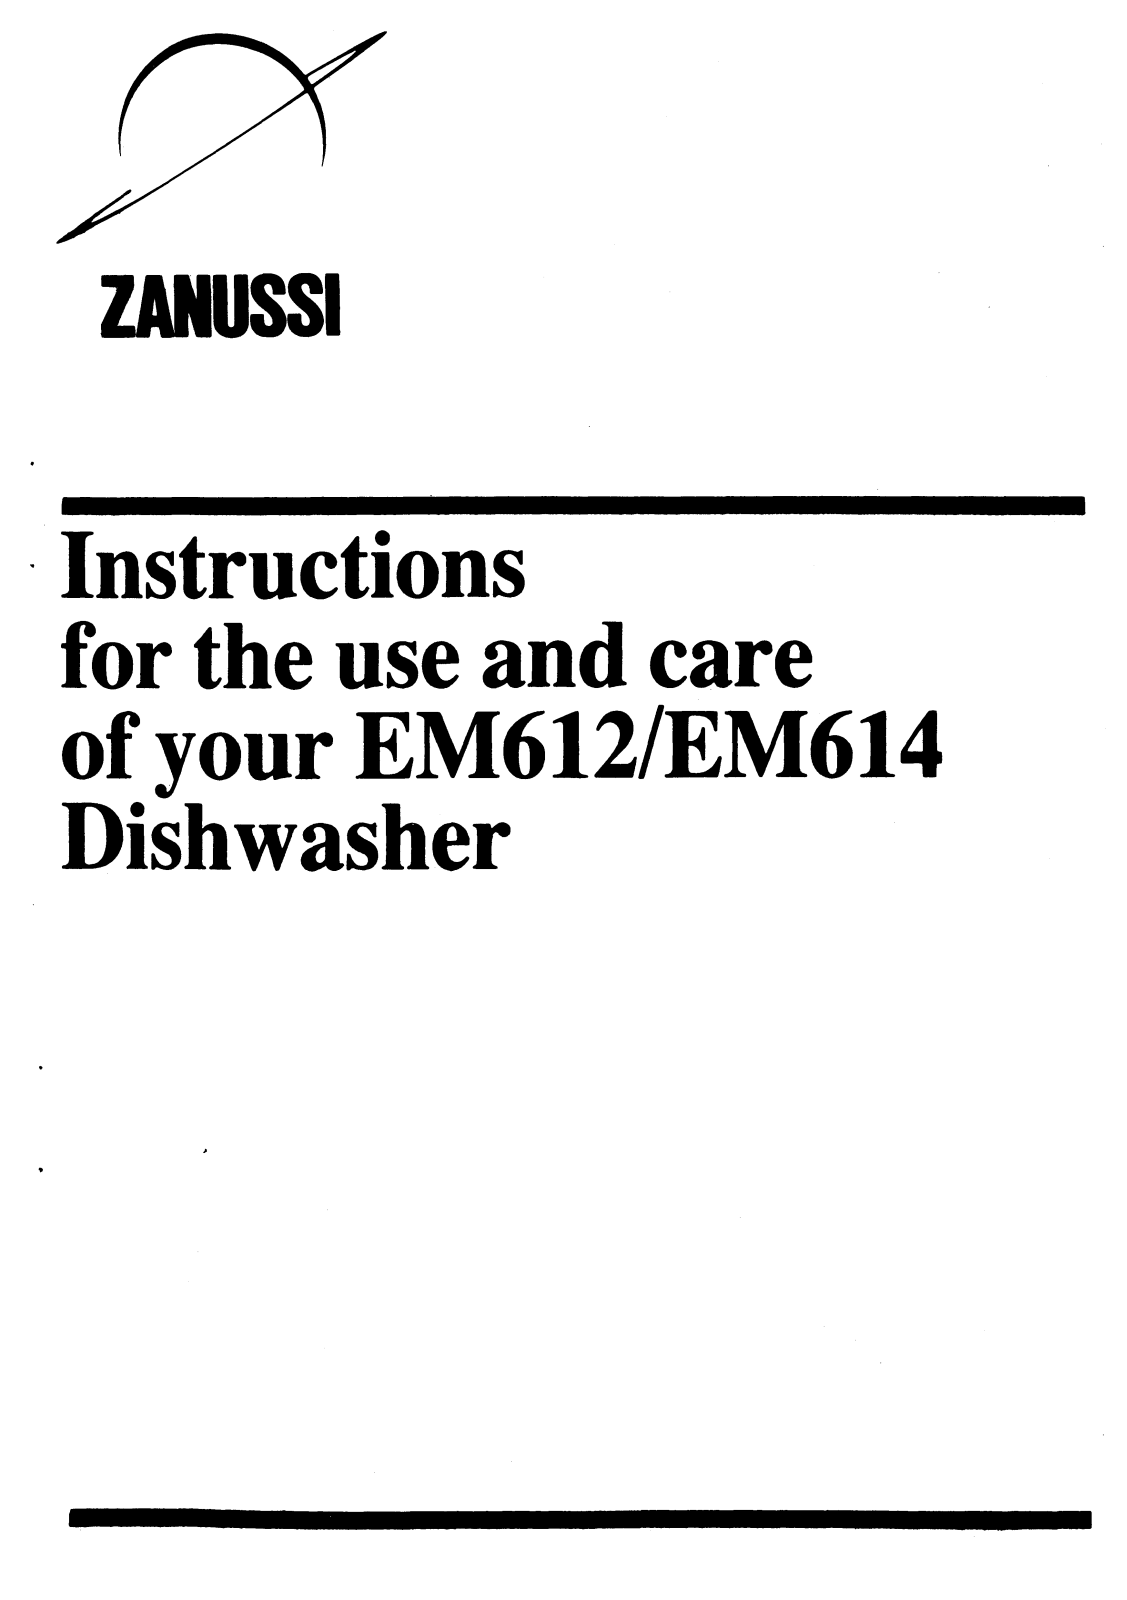 Zanussi EM614, EM612 User Manual